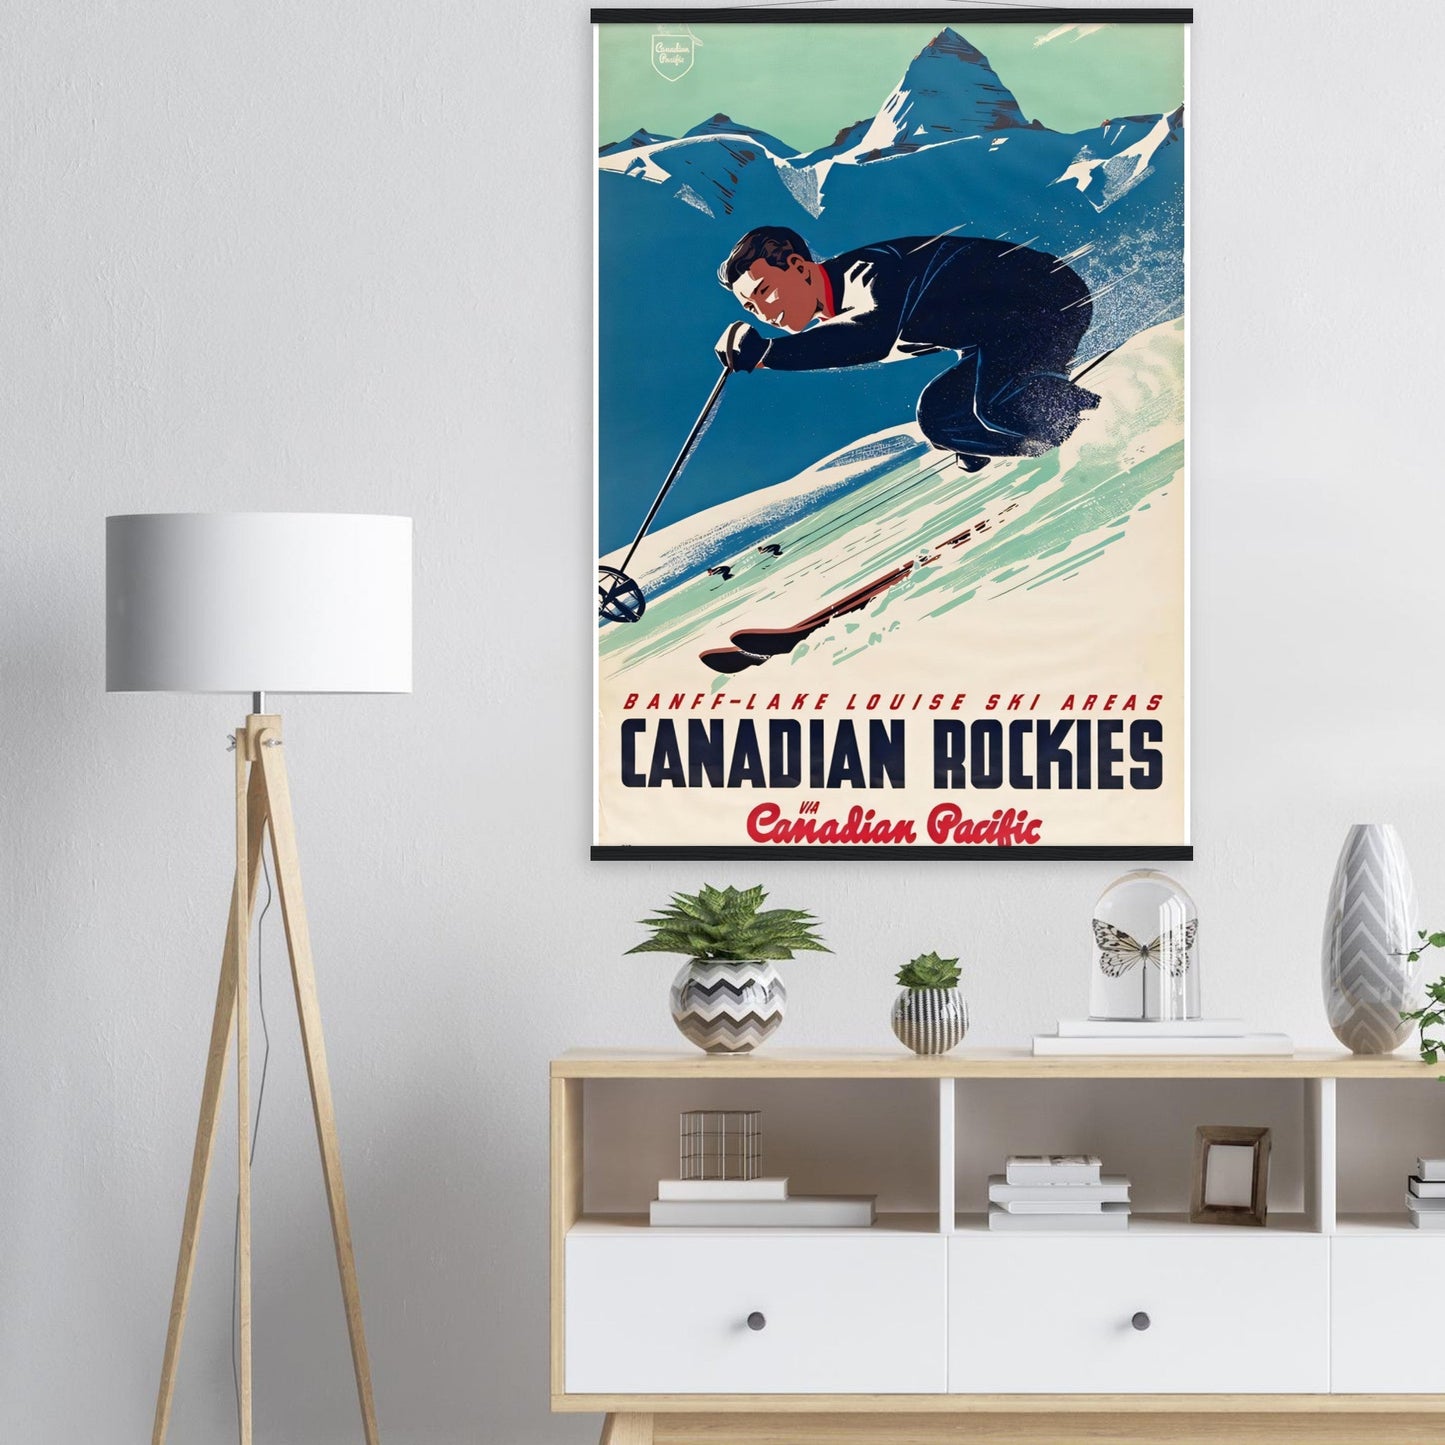 Canadian Rockies Vintage Poster Reprint on Premium matte Paper - Posterify